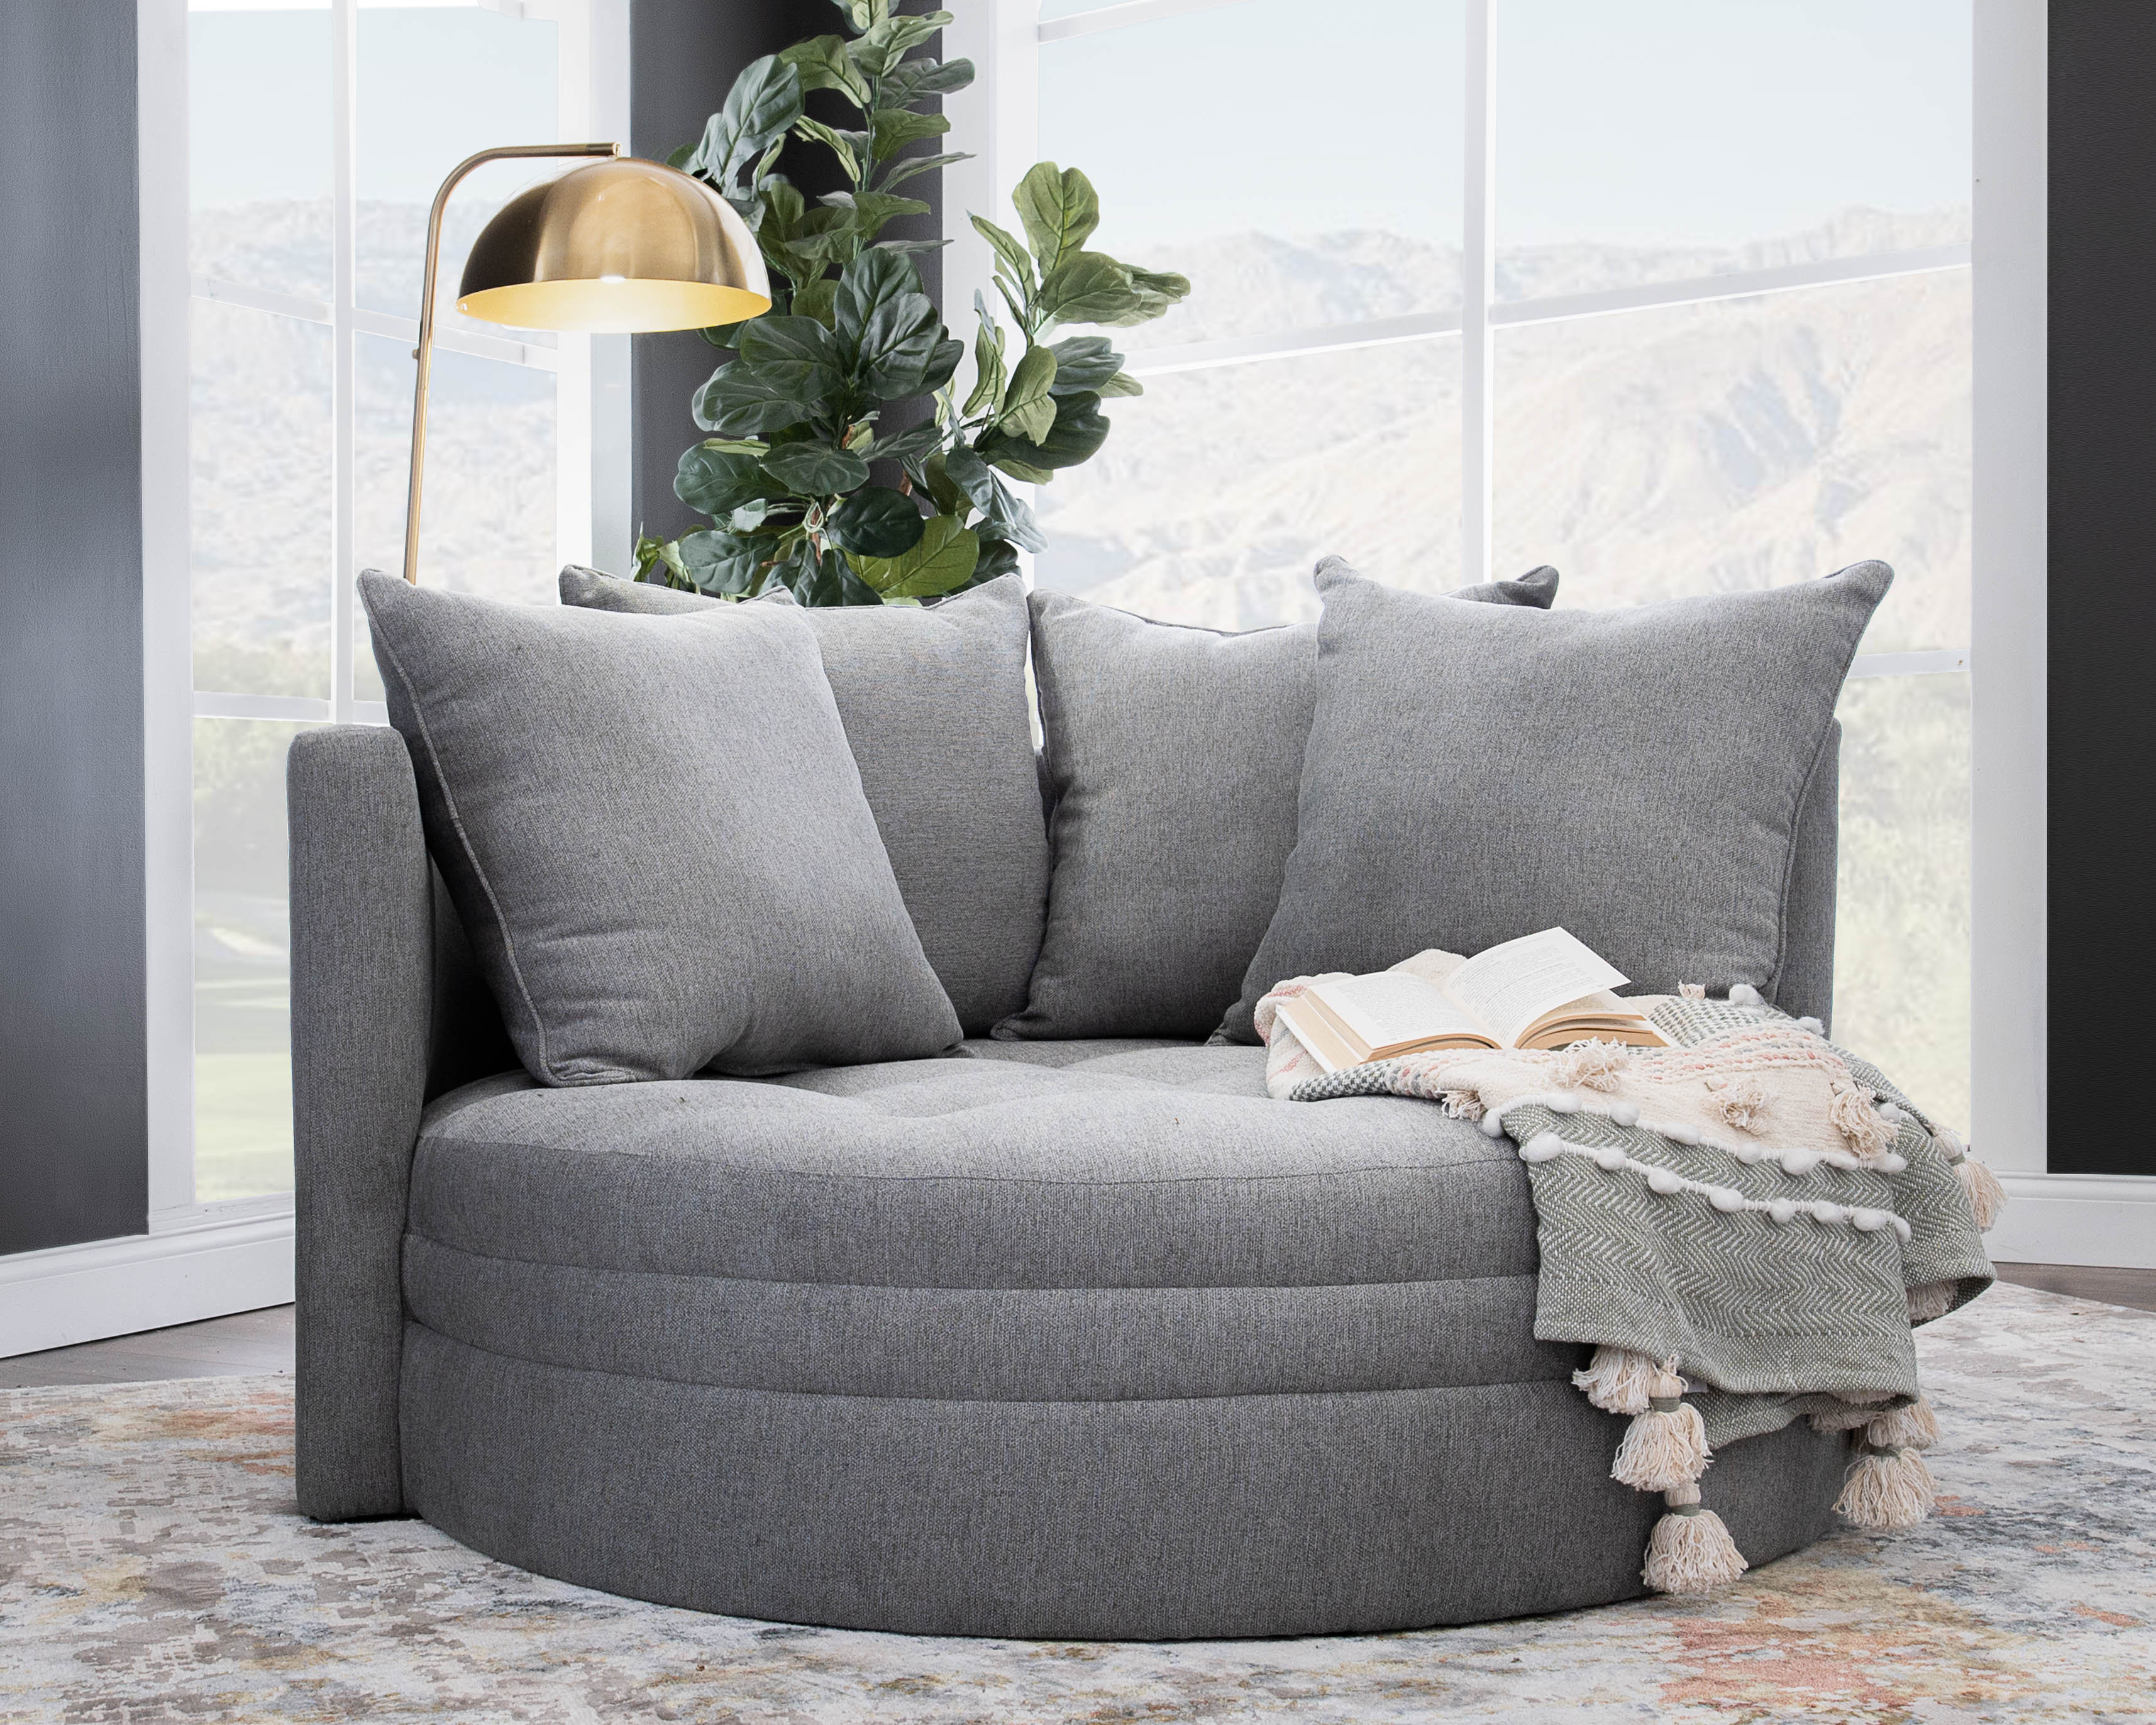 Make Perfect Comfy Window Seat Cushions! - Kim's Upholstery